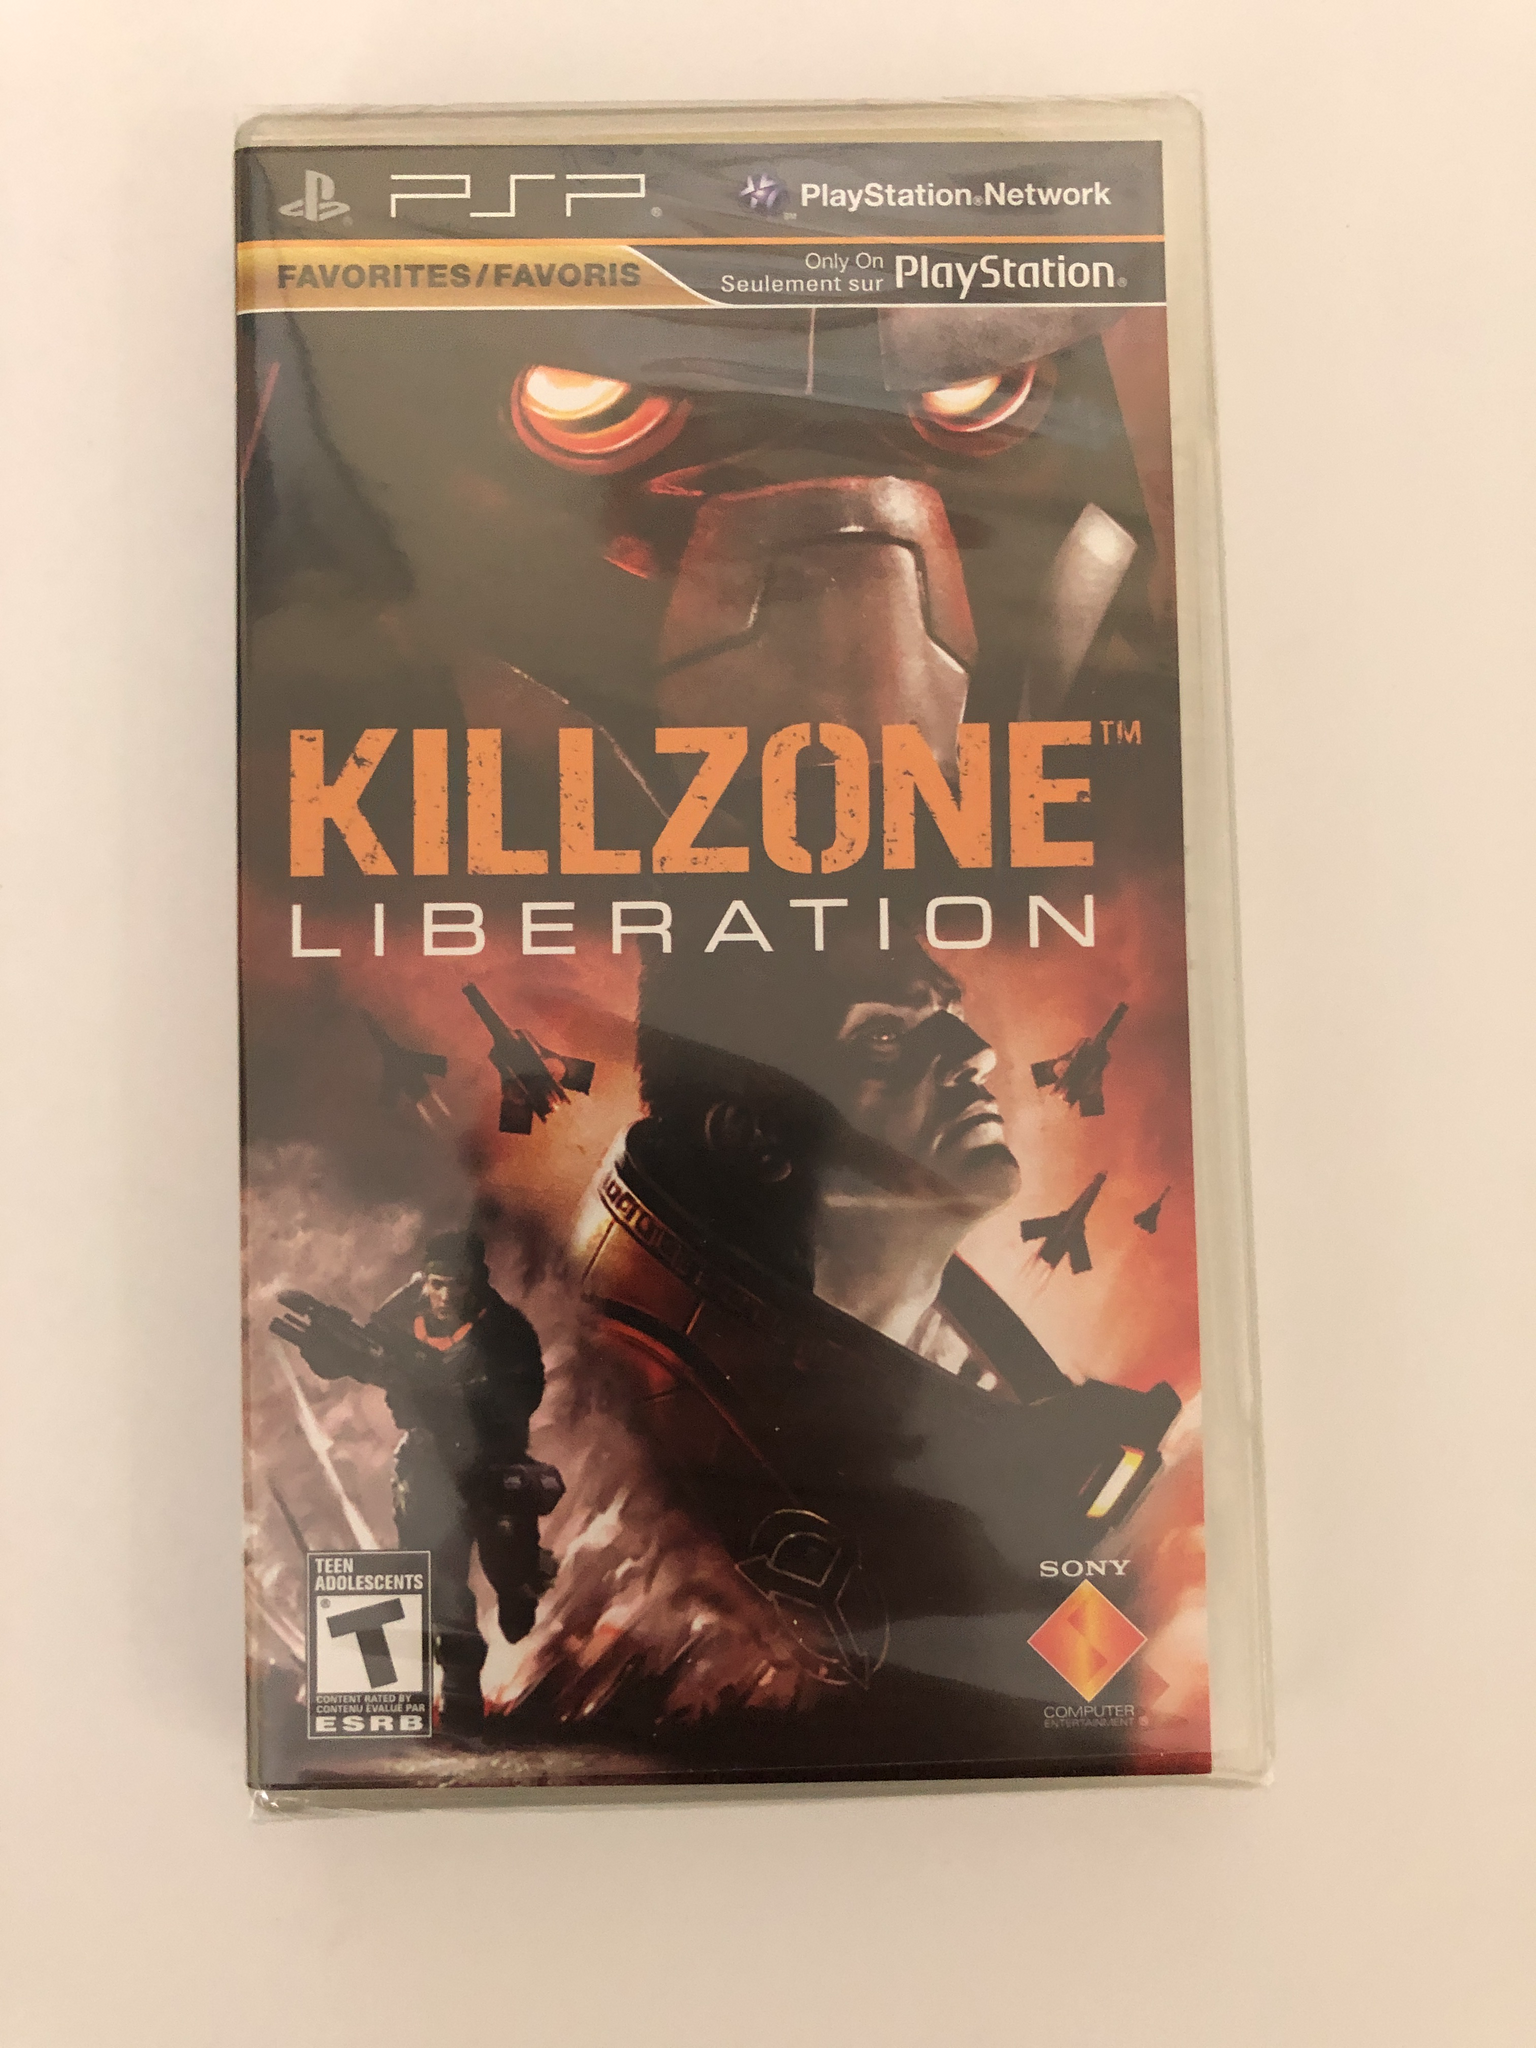 PlayStation Killzone Games